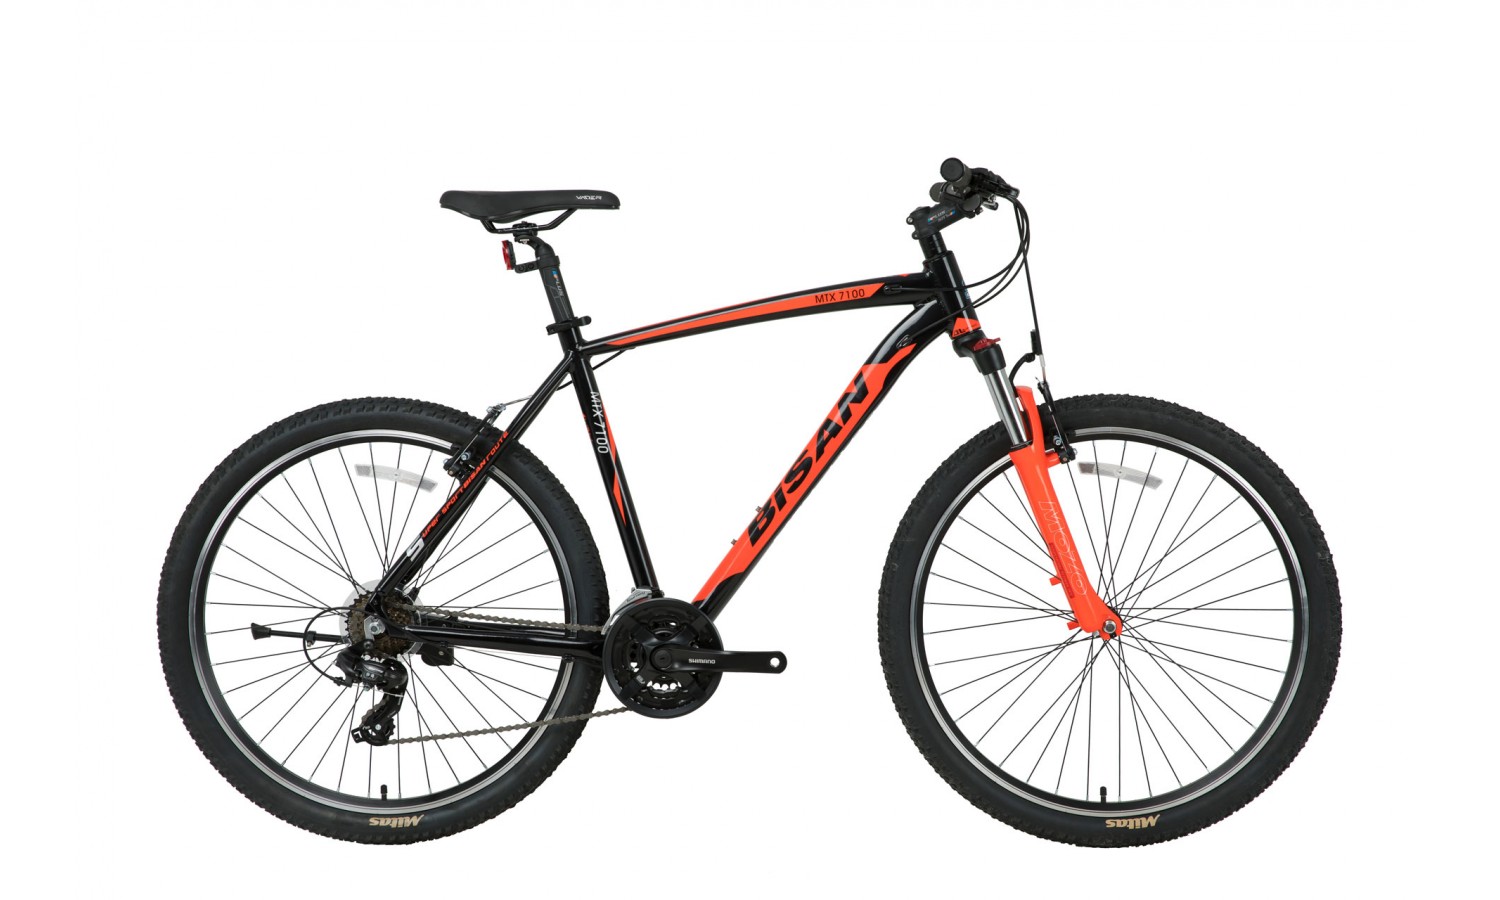 Bisan Mtx 7100 27.5 V Dağ Bisikleti (Siyah-Kırmızı)